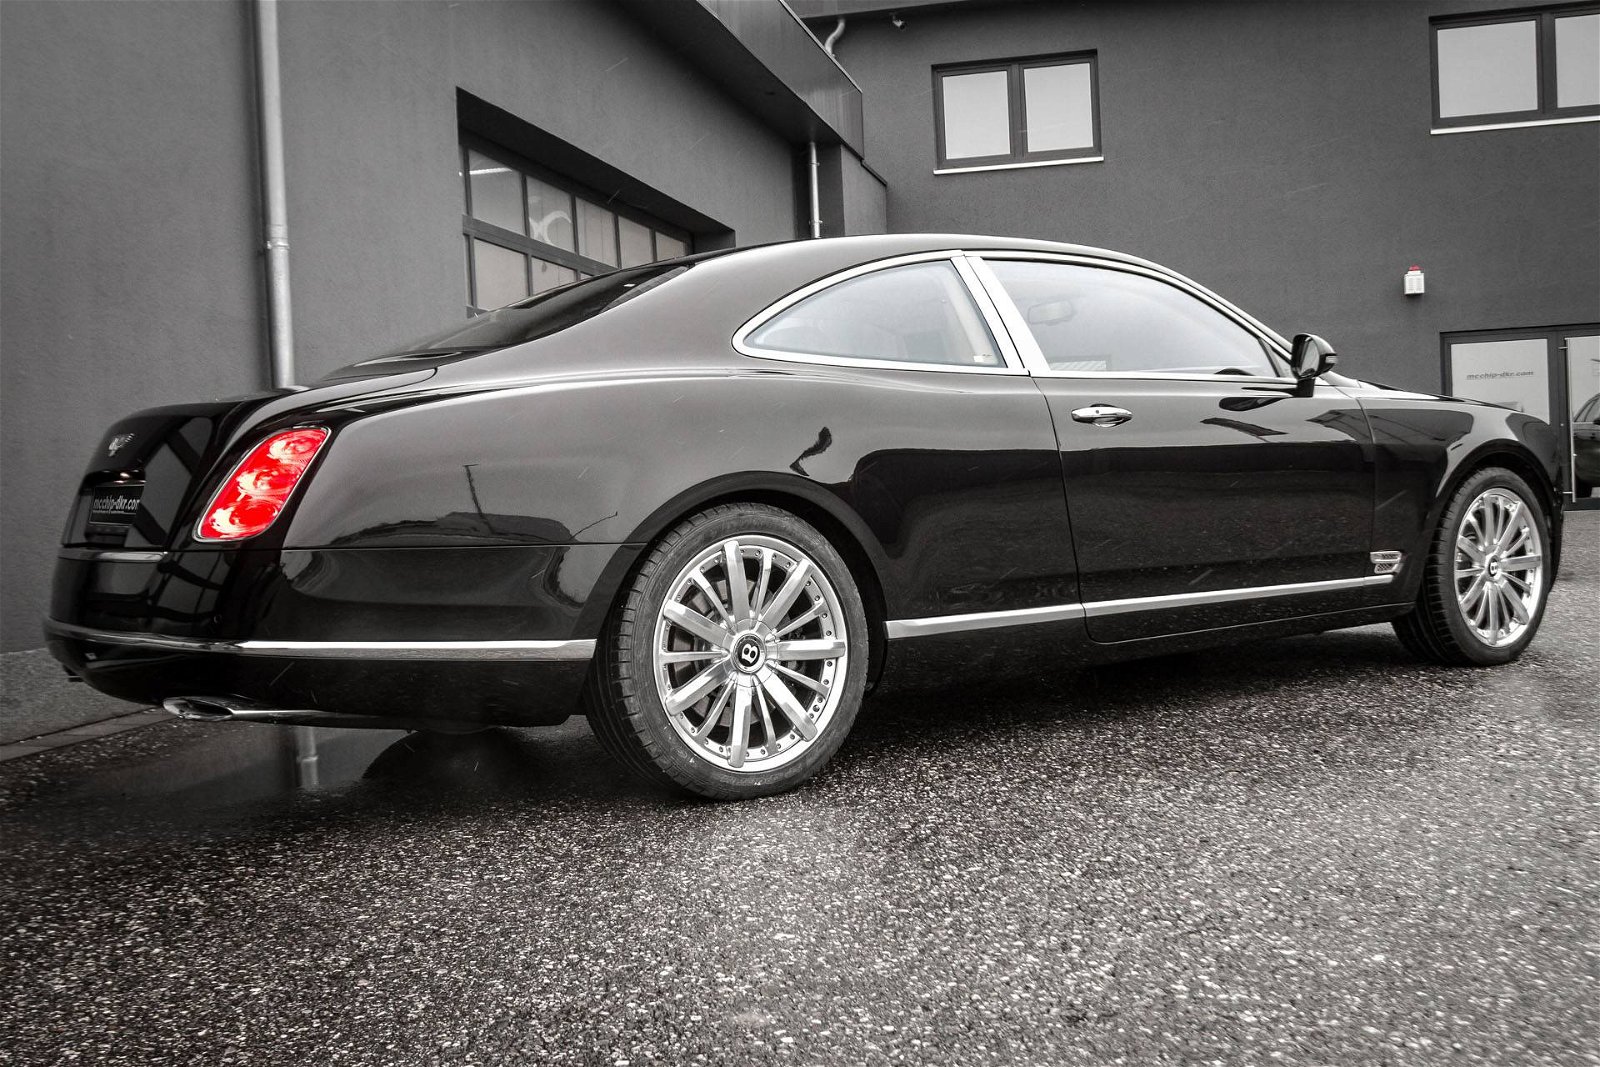 Bentley-Mulsanne-Coupe-conversion-by-McChip-DKR-26